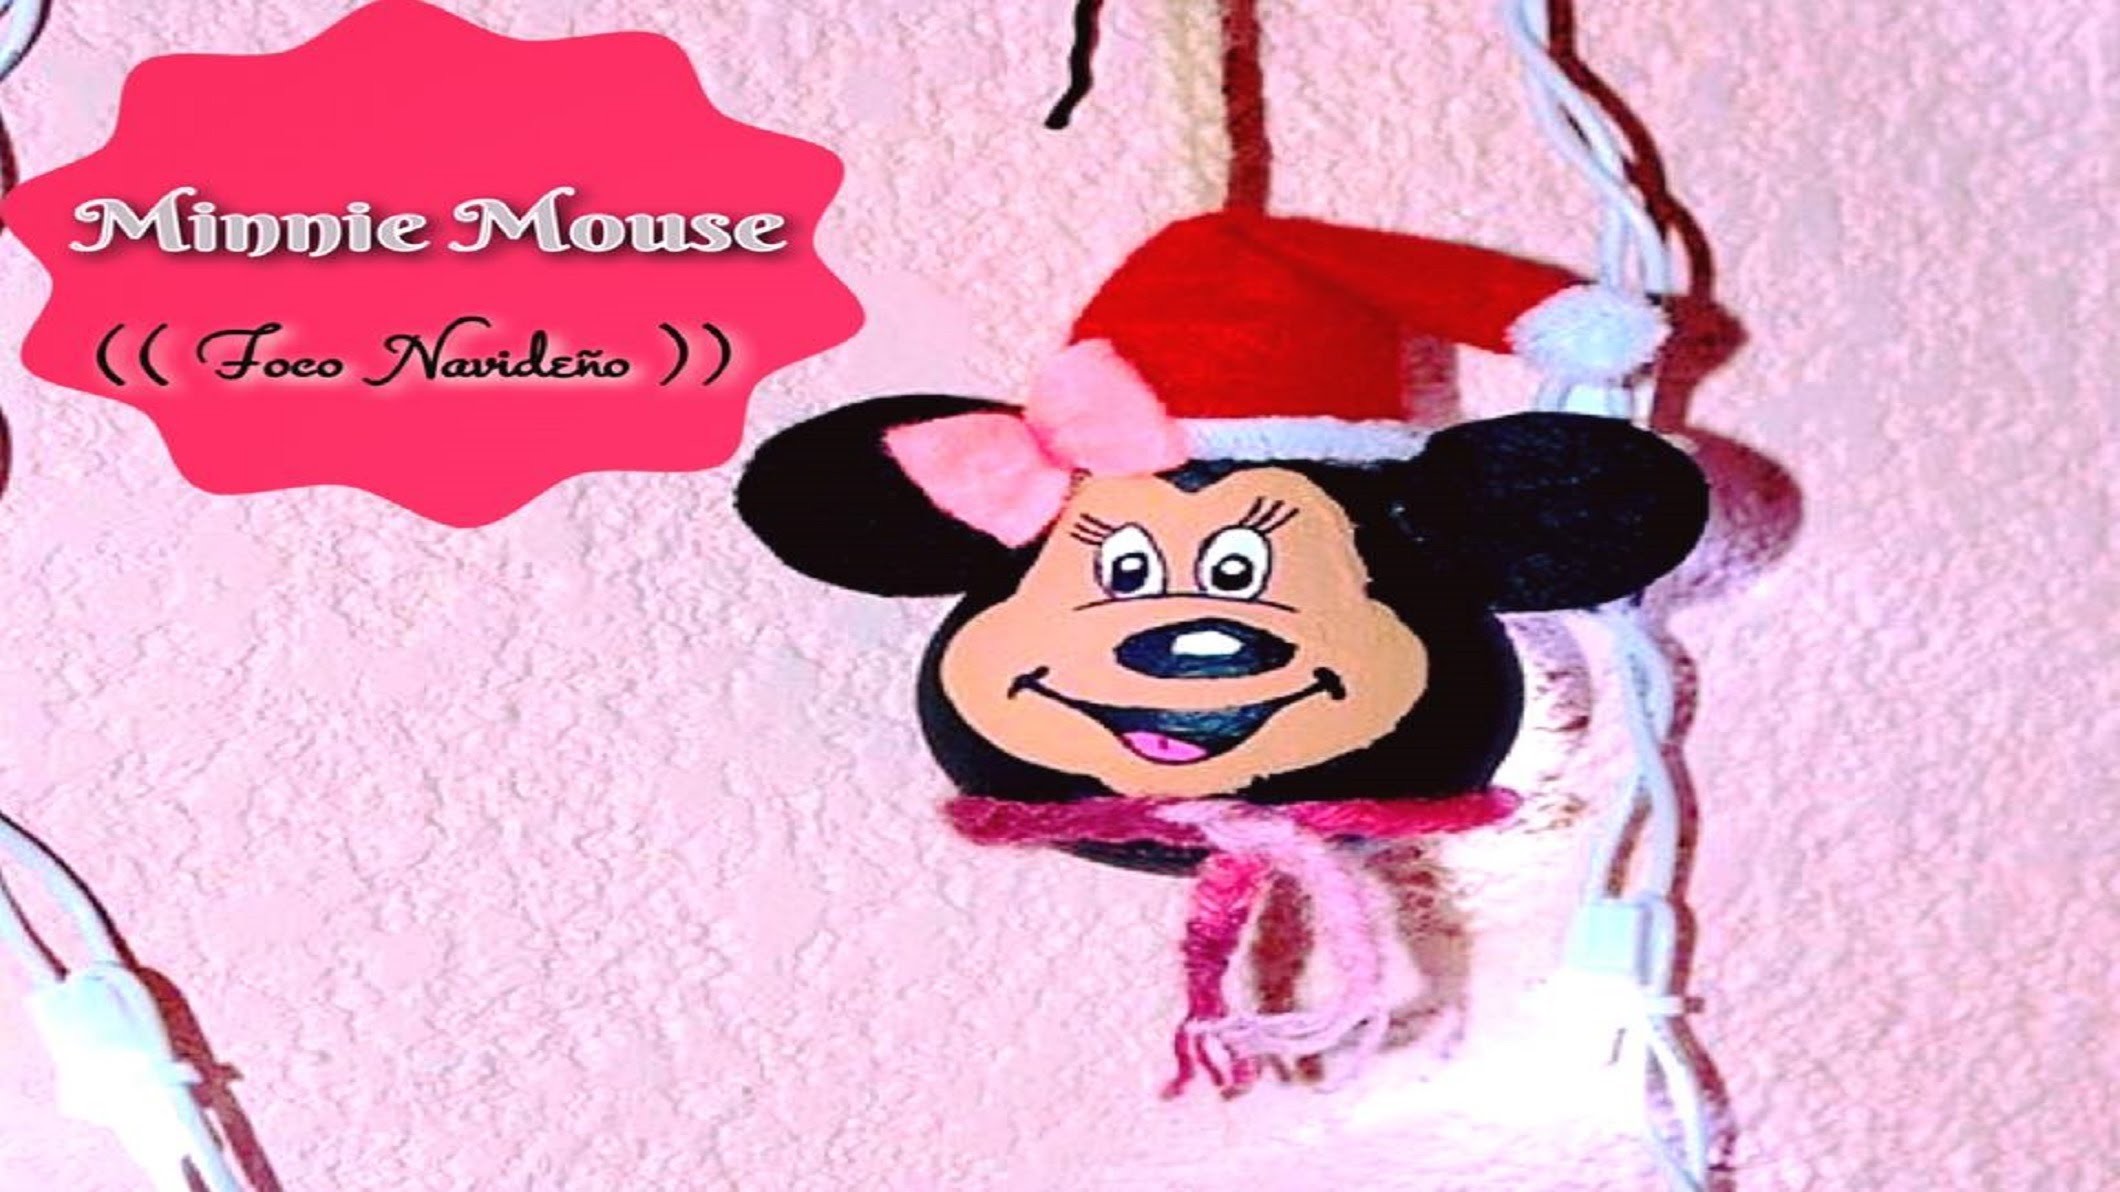 Minnie Mouse (( Foco Navideño ))